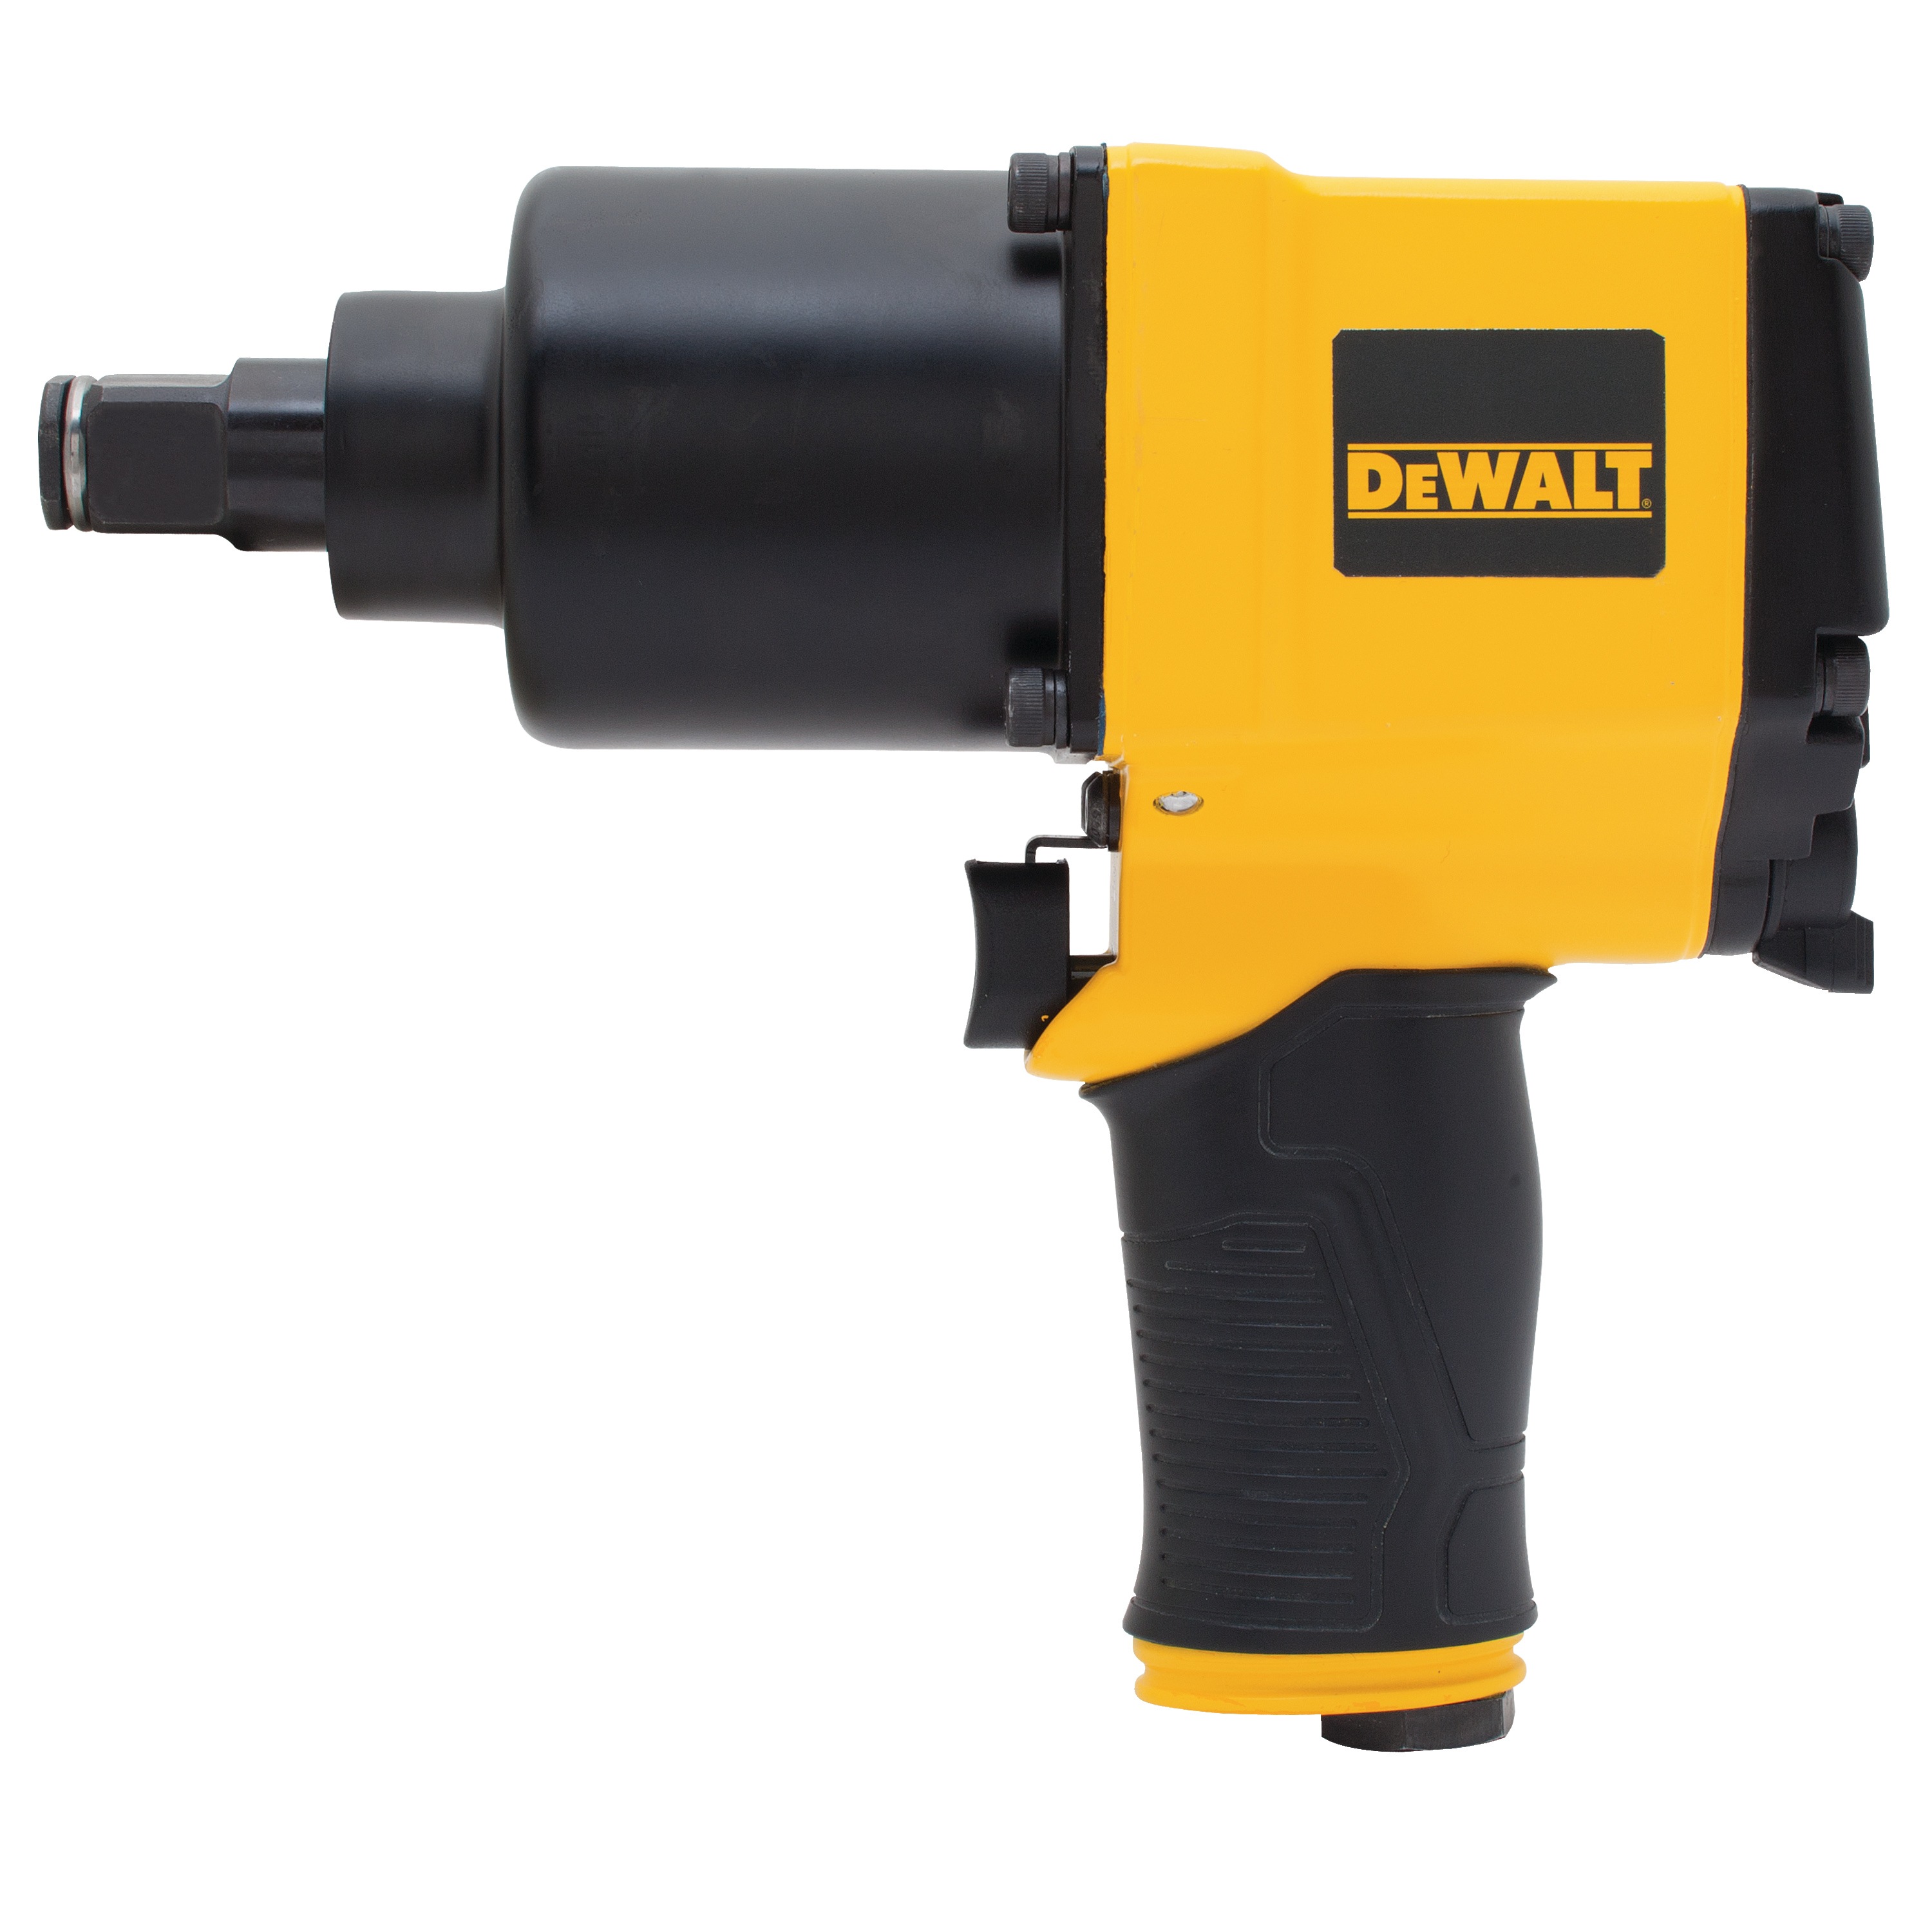 DEWALT DWMT70773L 1//2 inch Heavy-Duty Impact Wrench for sale online